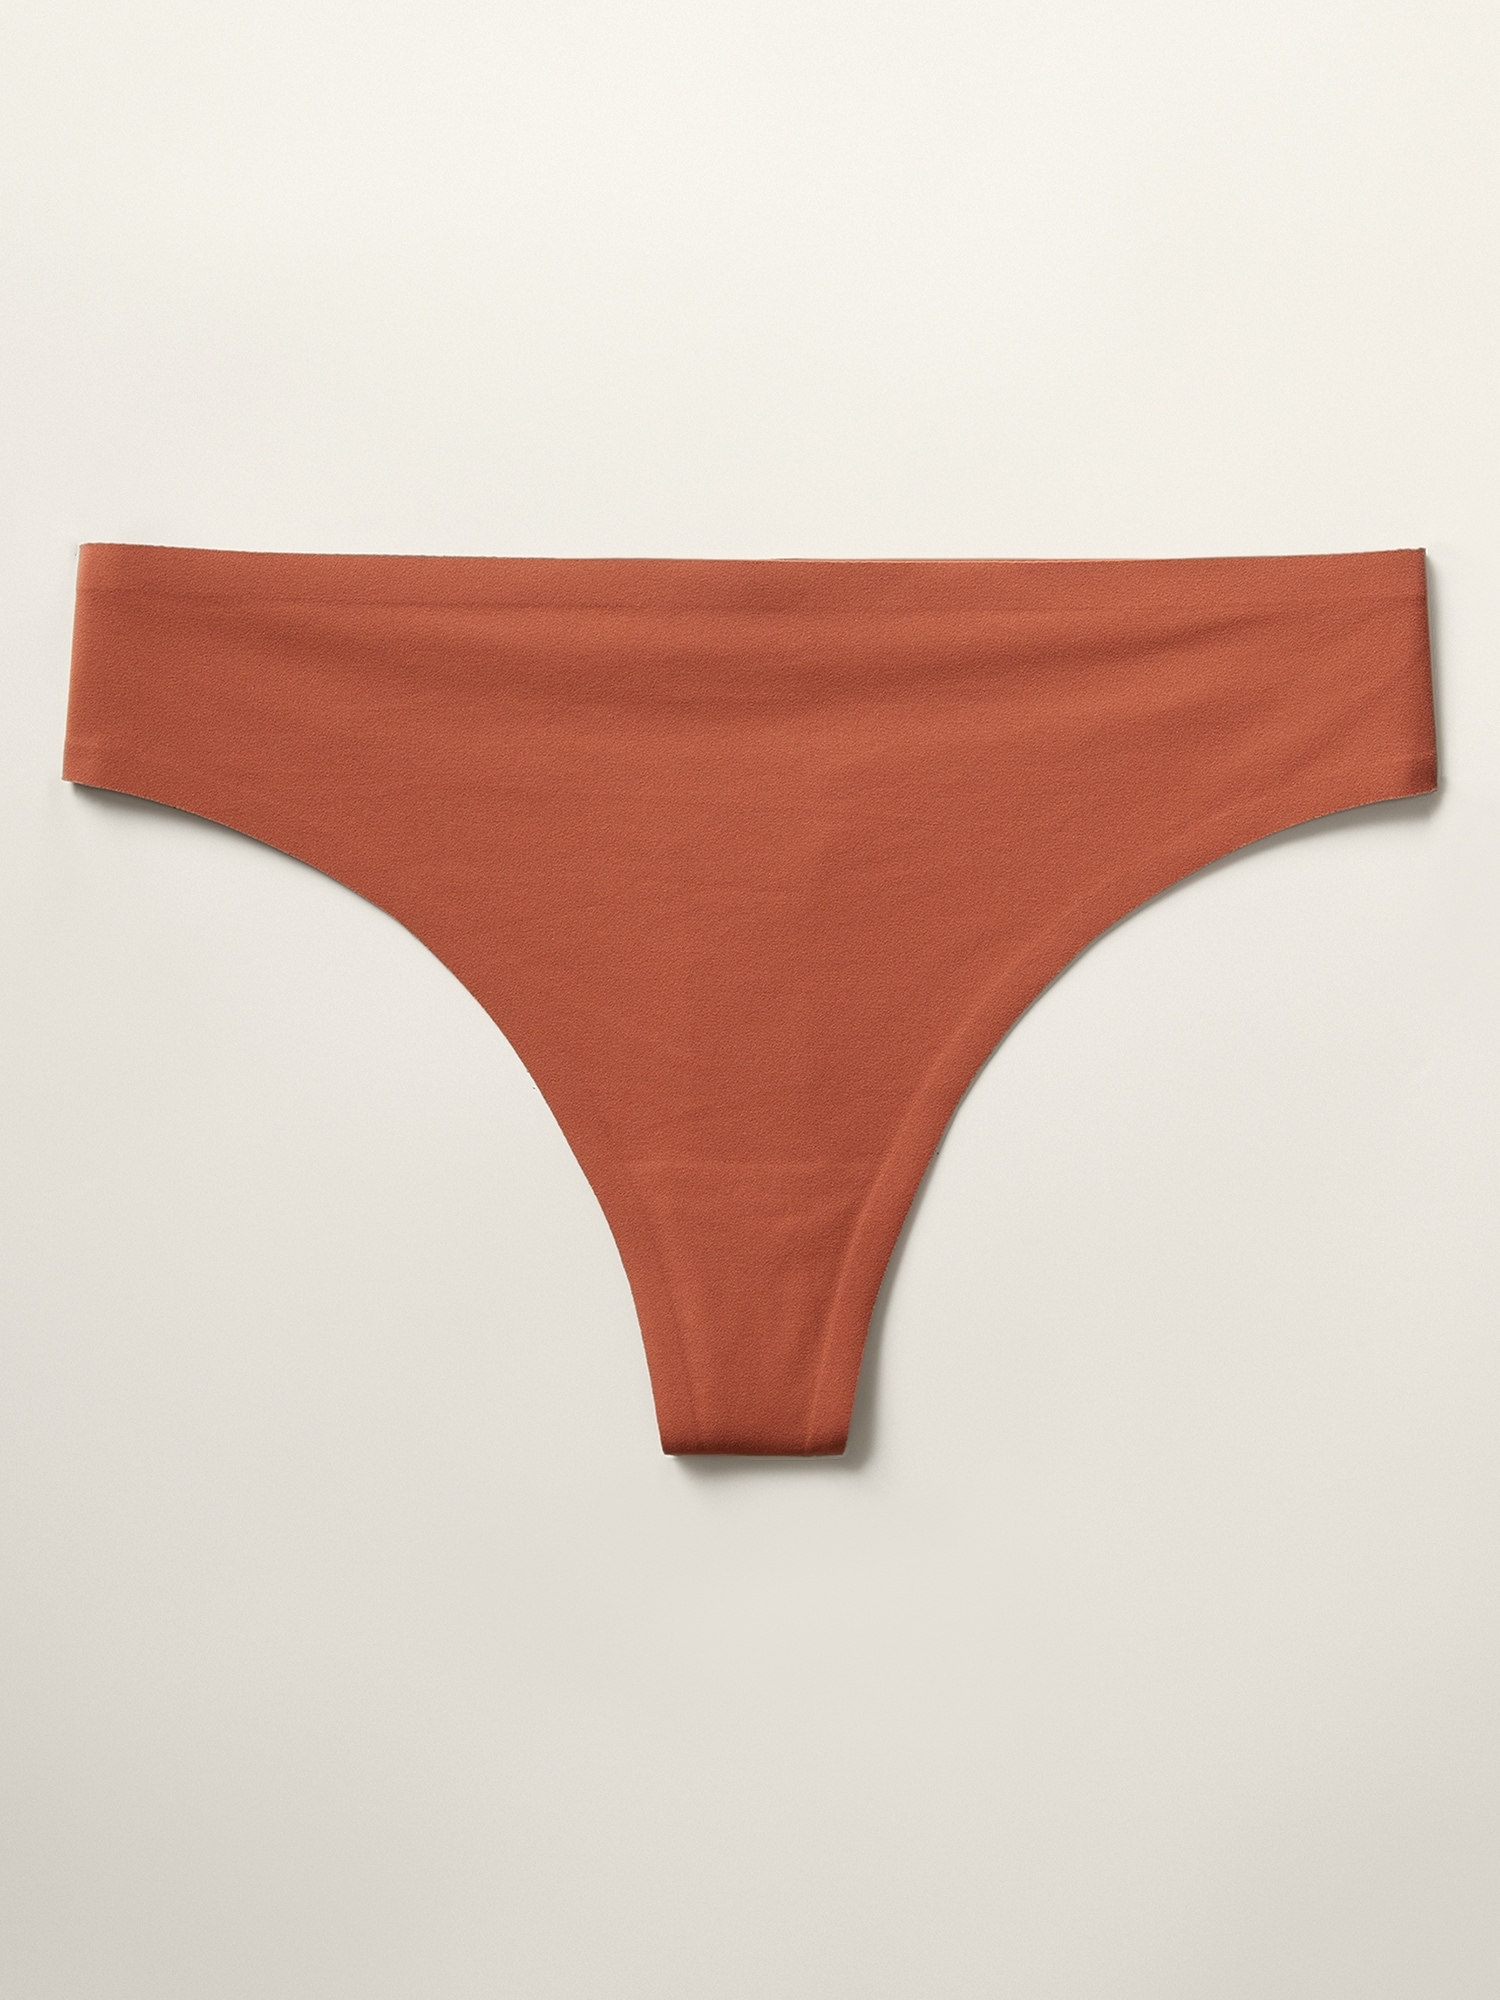 Athleta Ritual Thong Underwear In Copper Brown